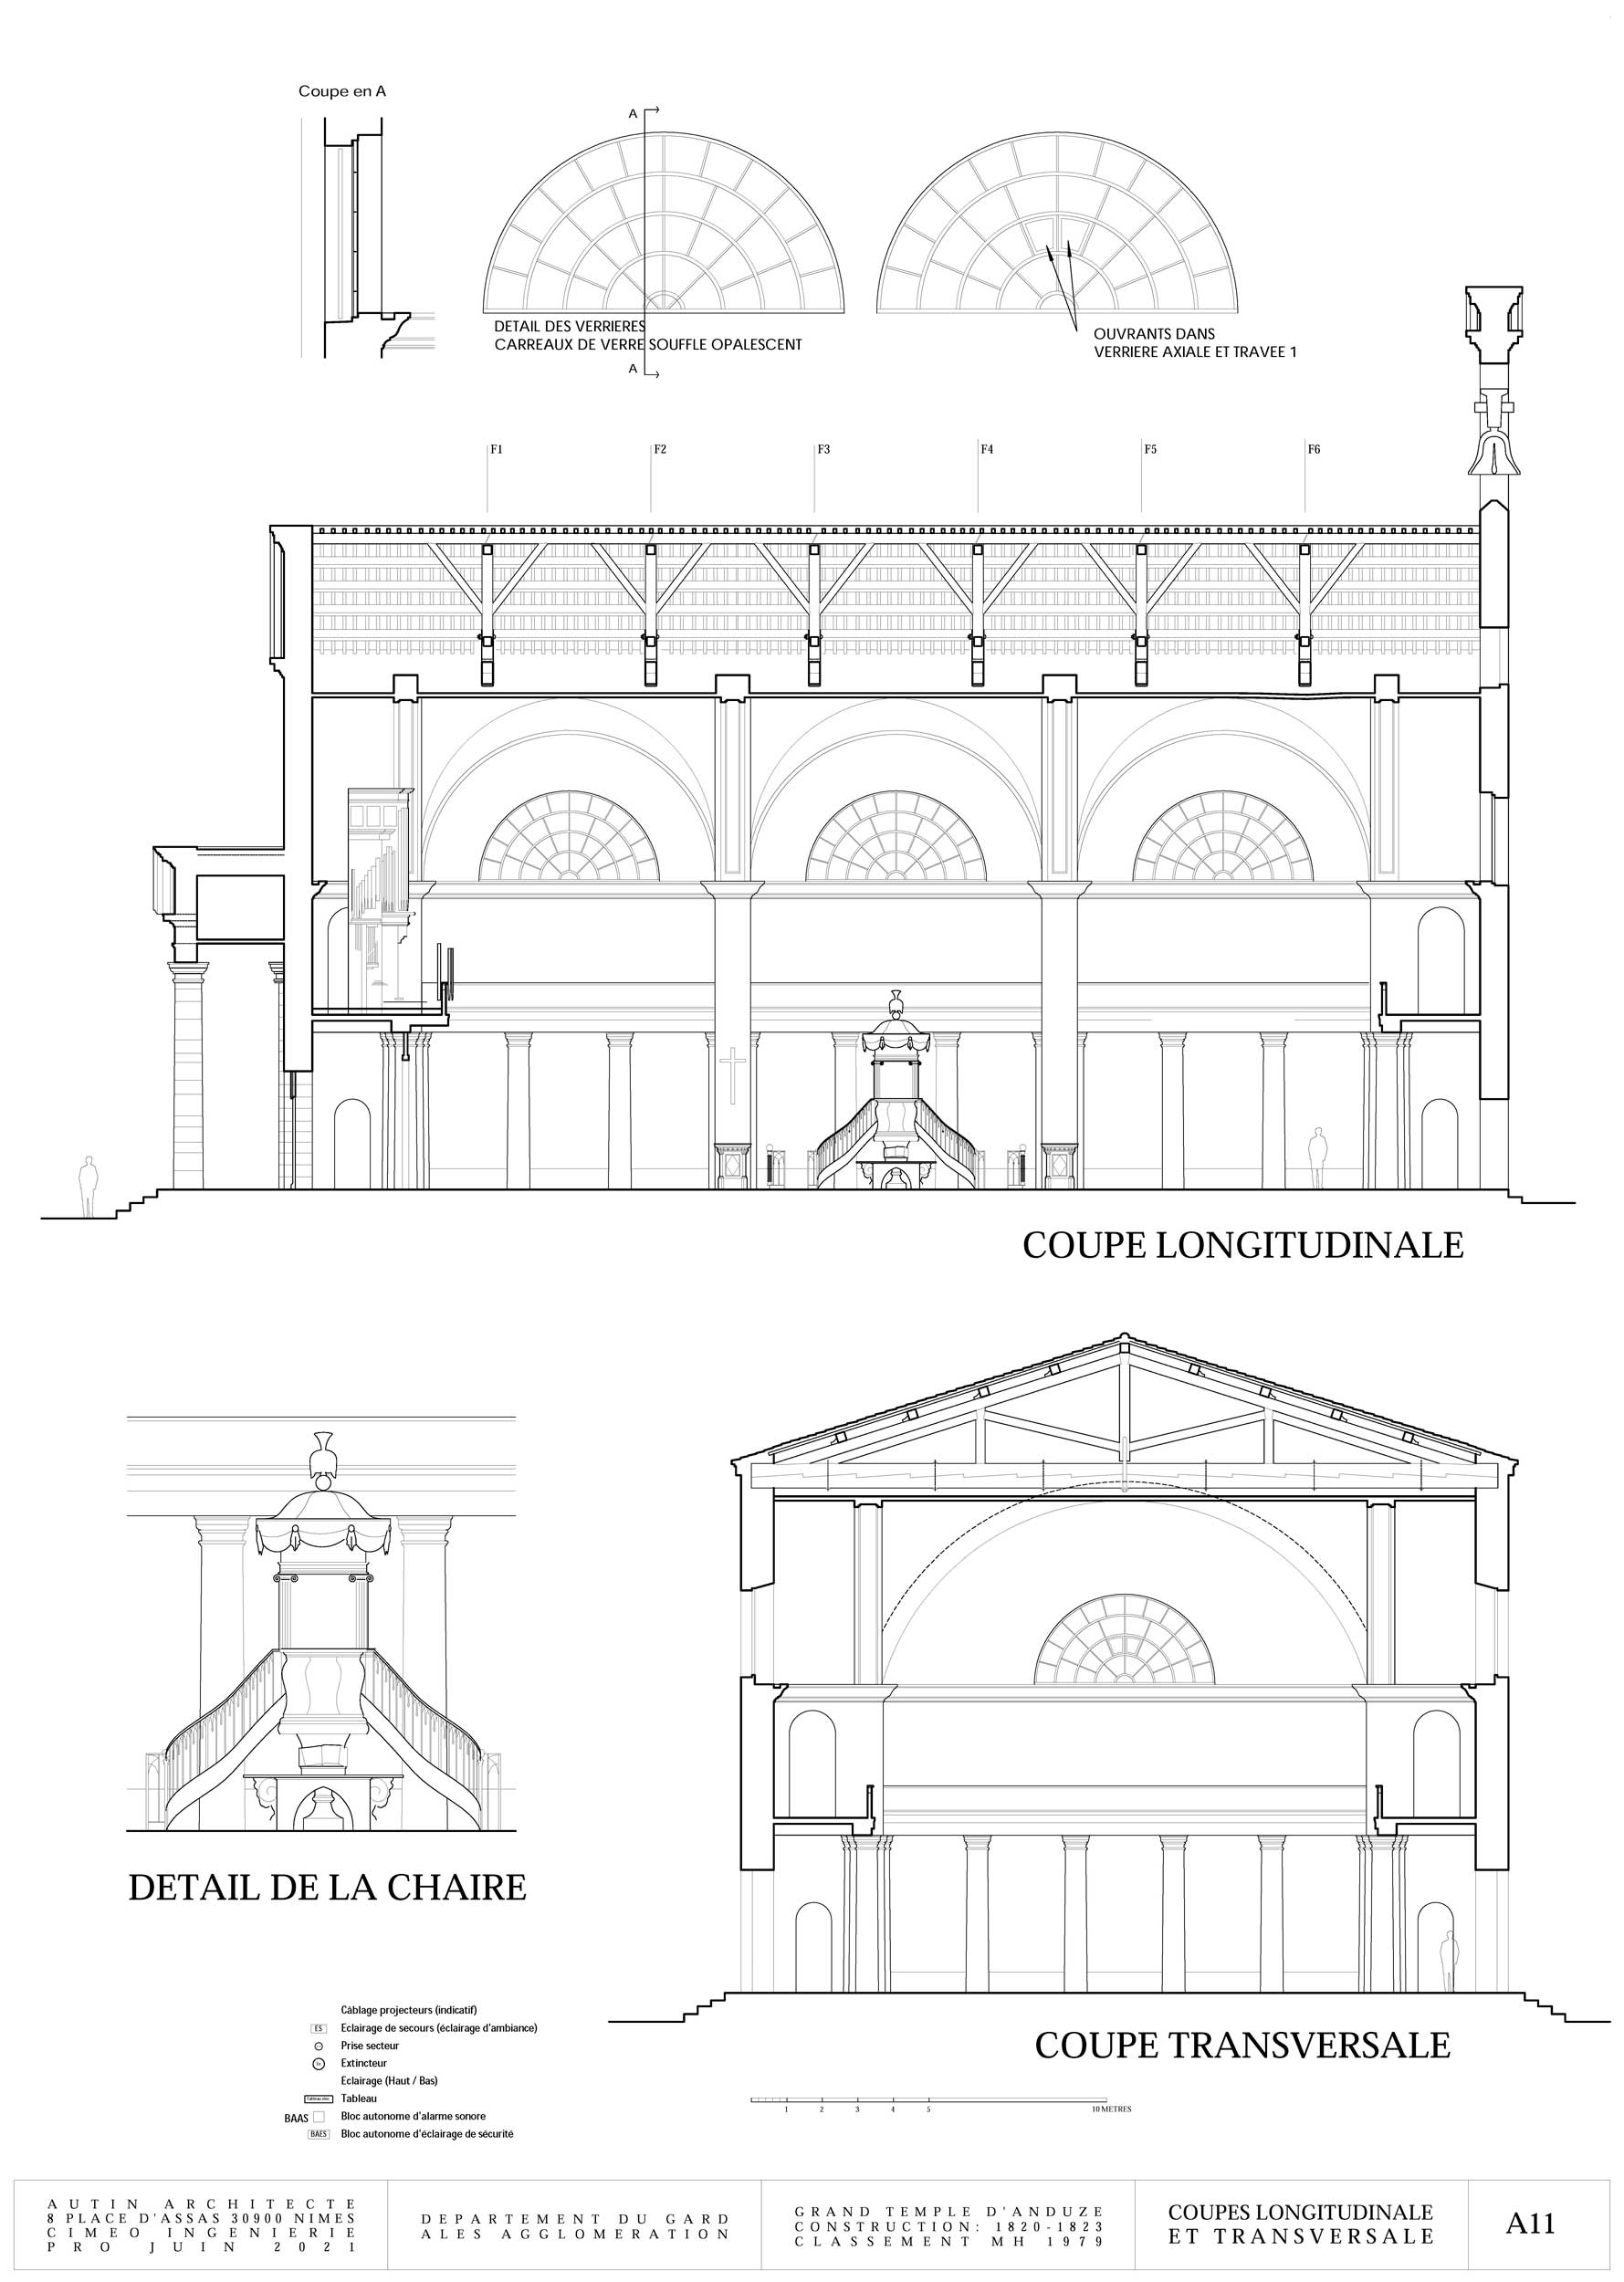 Blueprints of a church